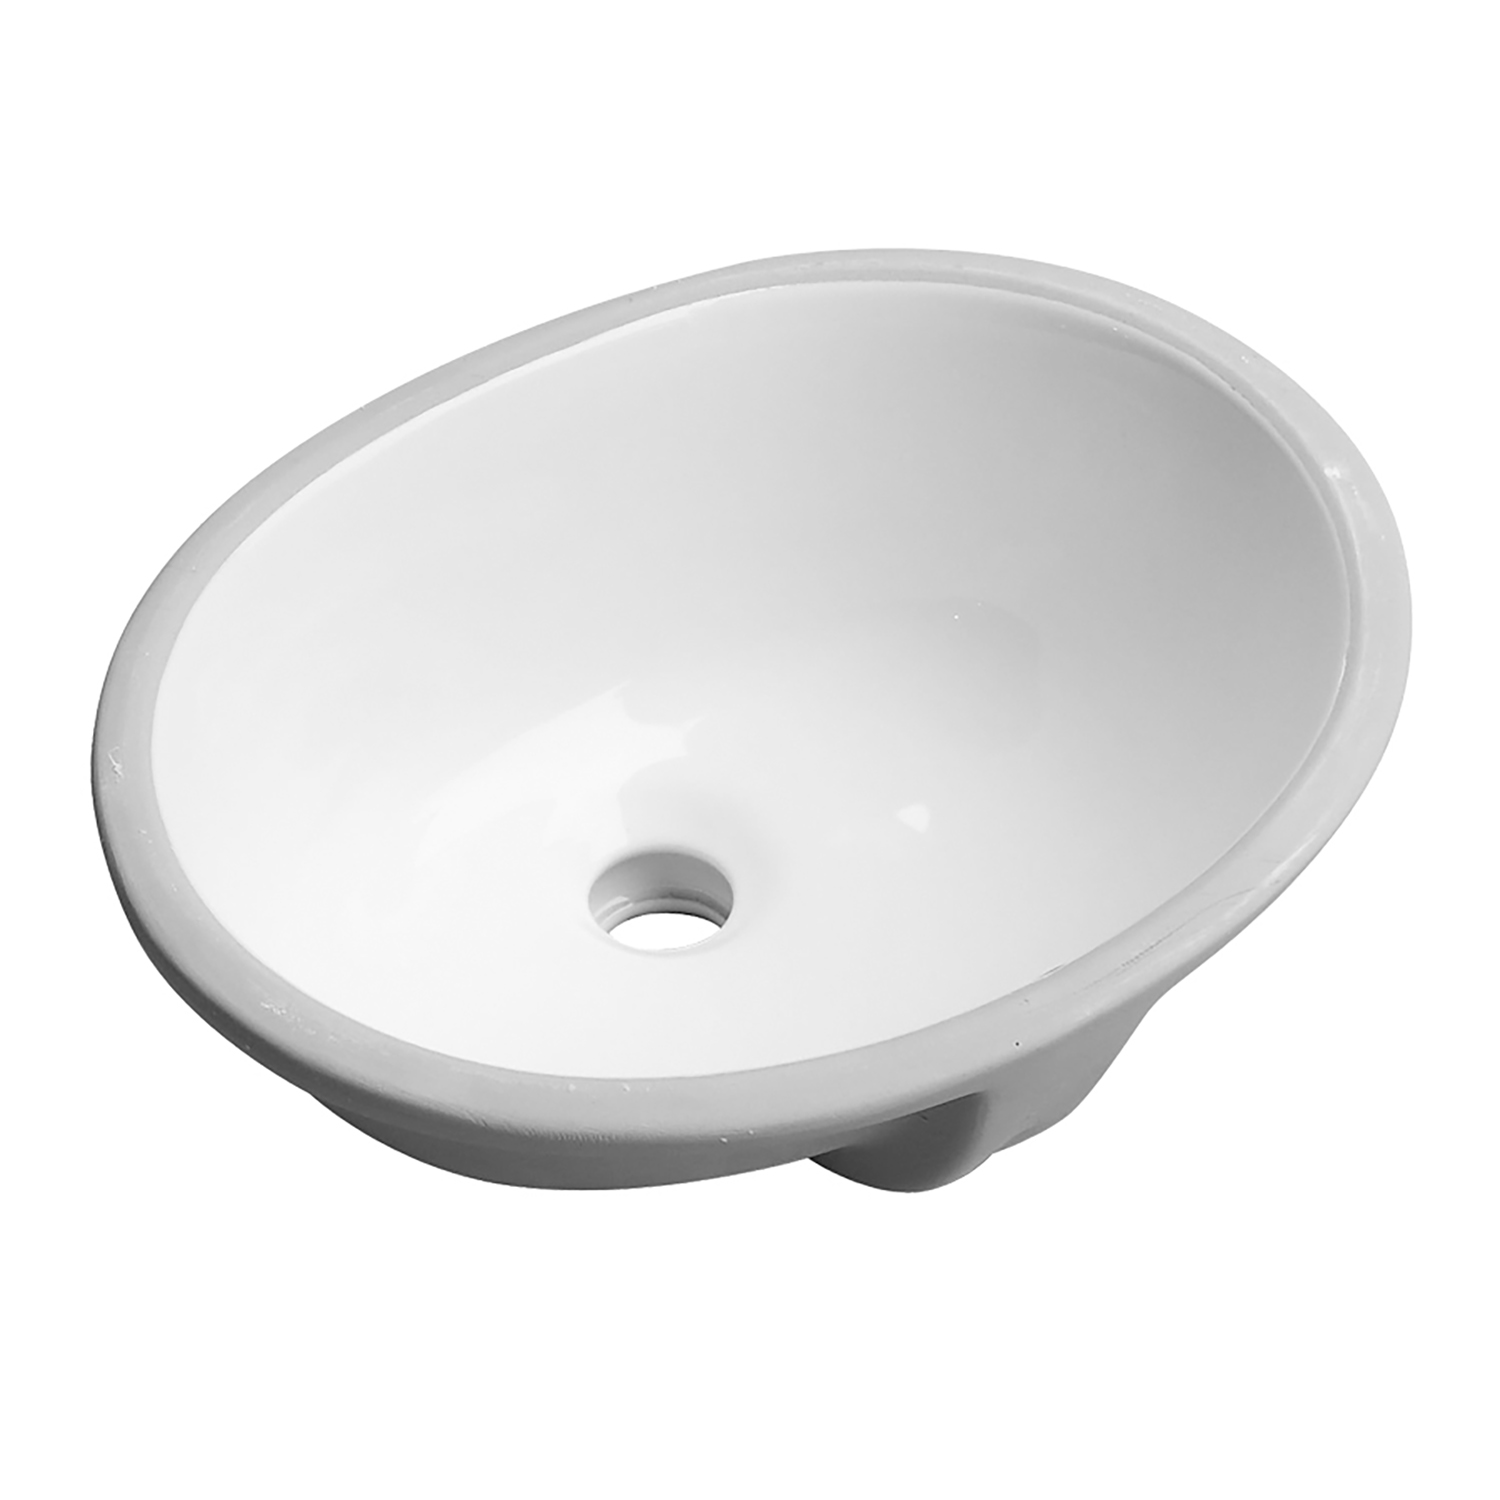 Duko C4016 16" x 13" White Oval Ceramic Bathroom Vanity Undermount Sink